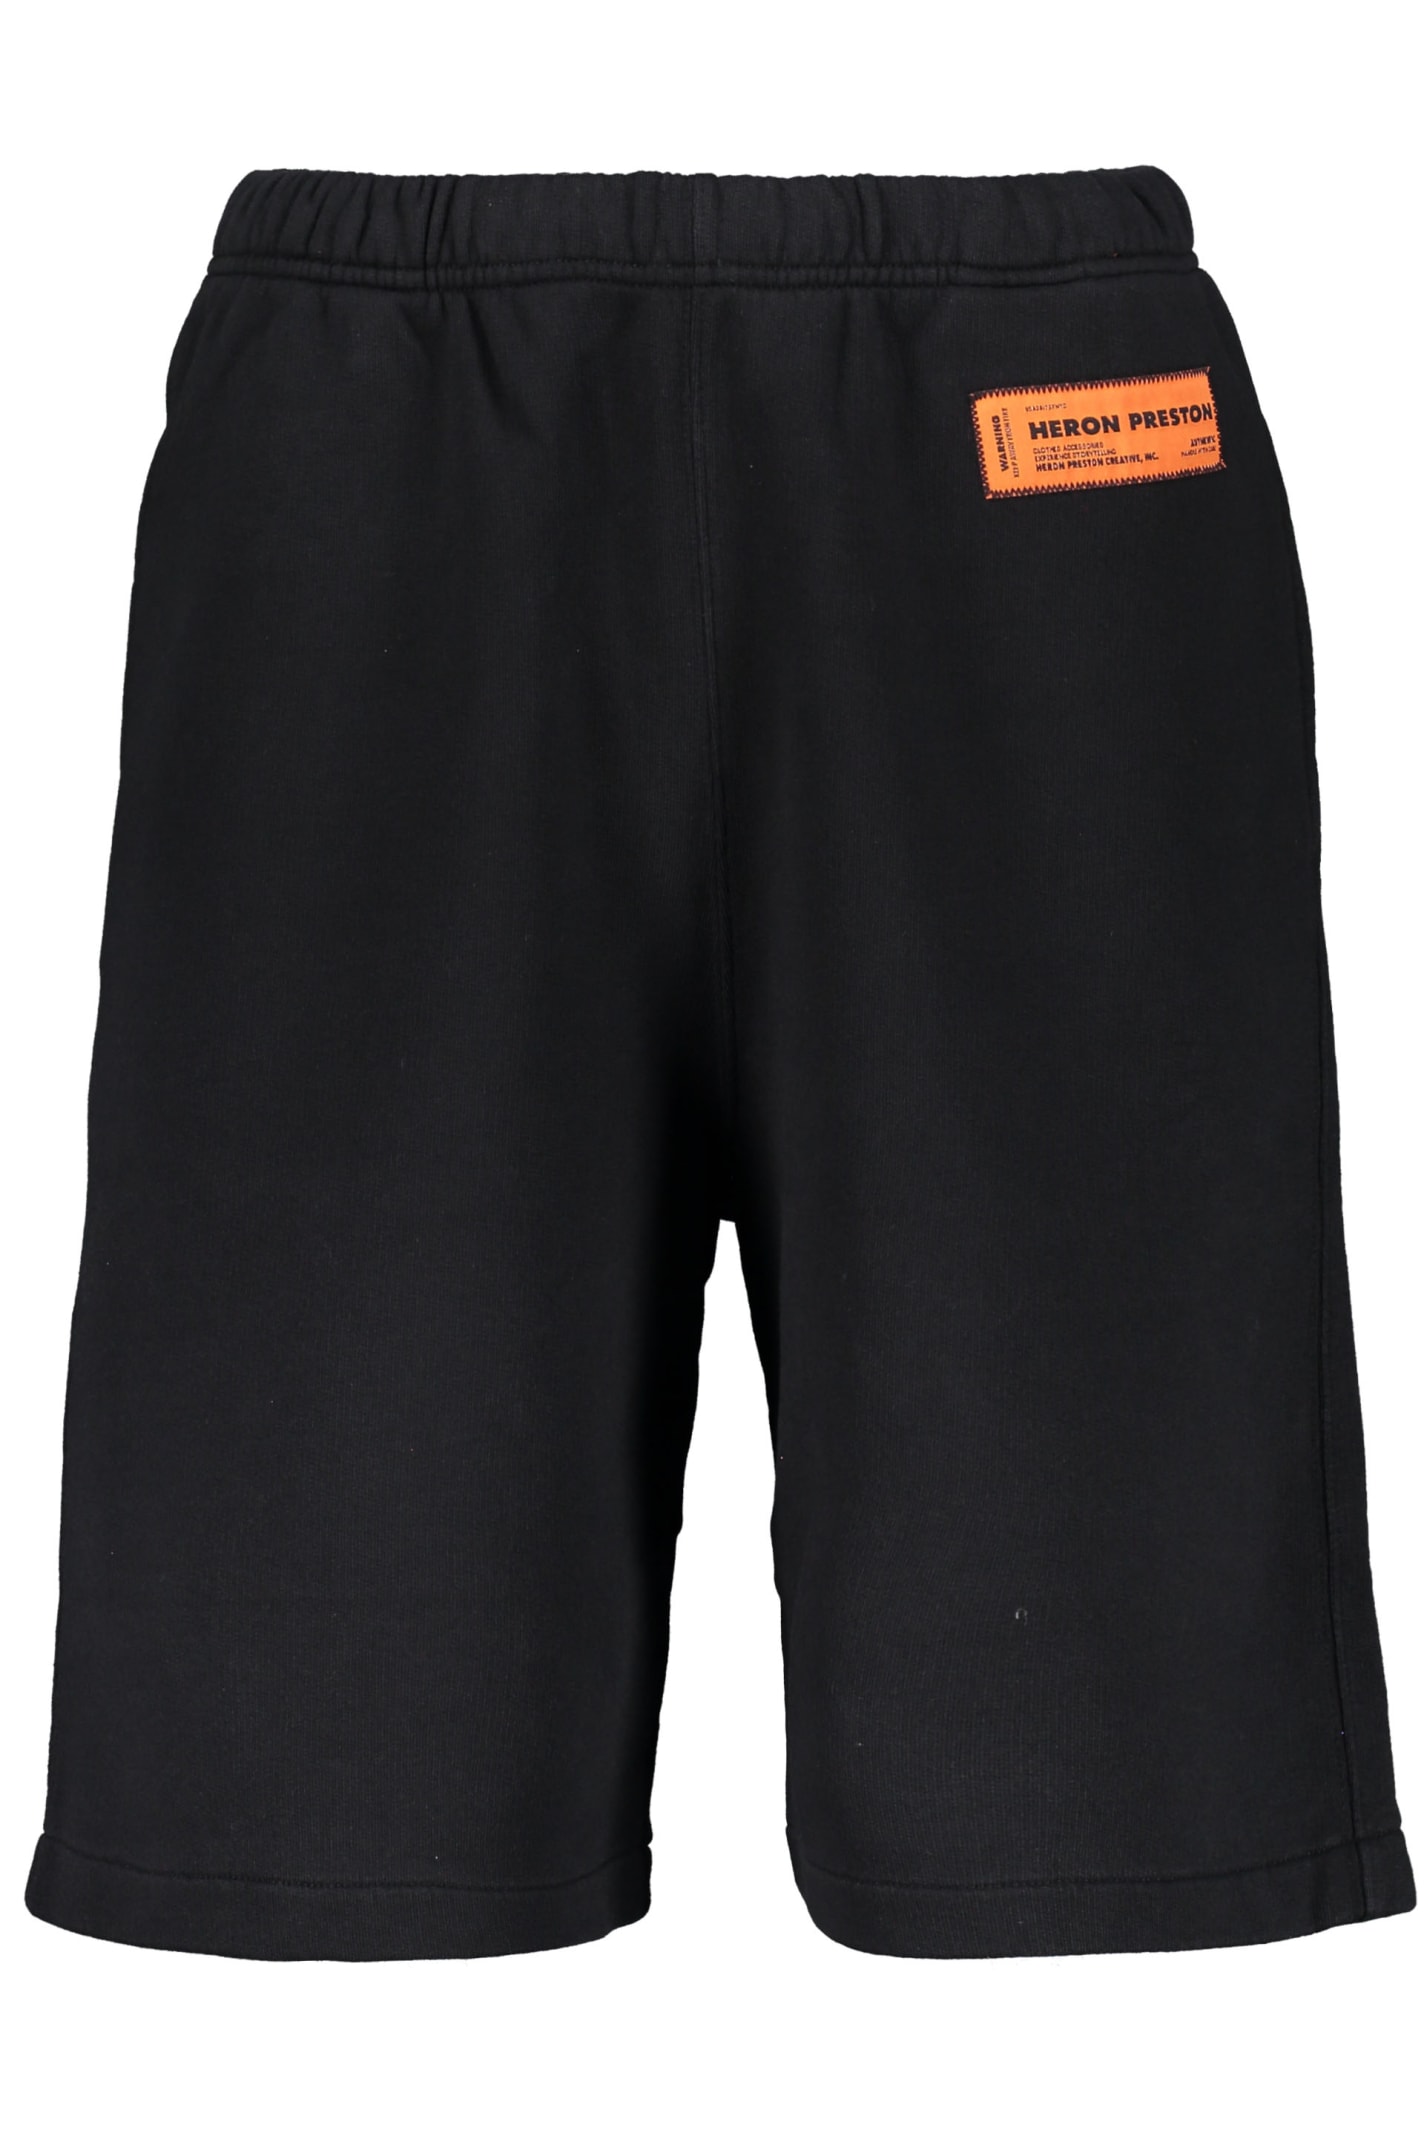 Heron Preston Cotton Bermuda Shorts In Black